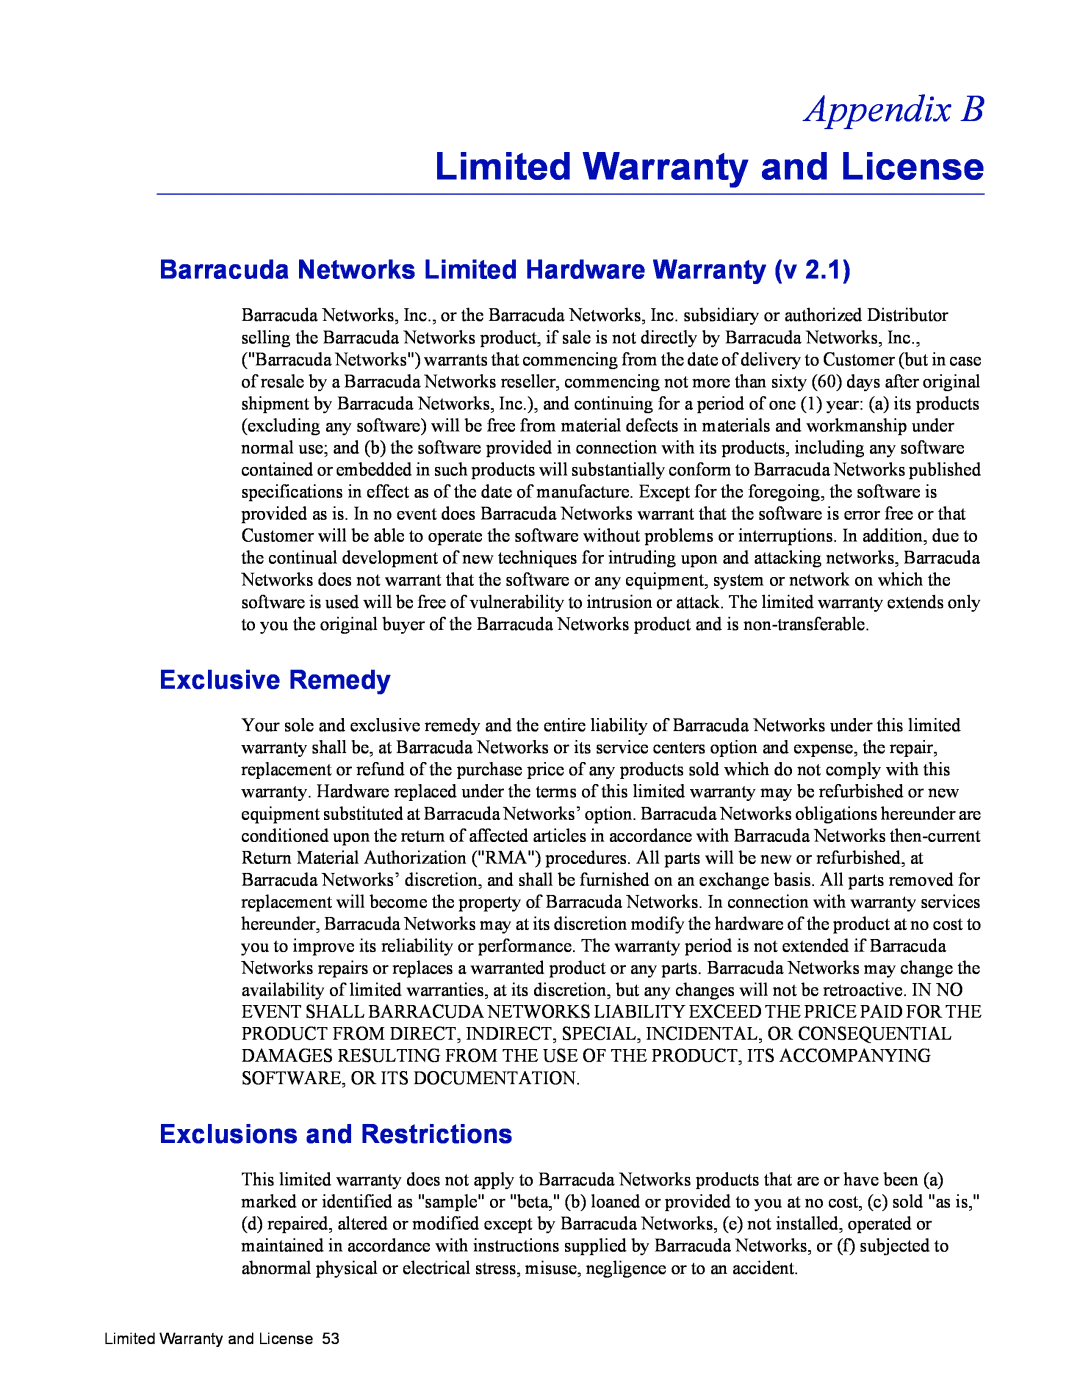 Barracuda Networks 4 manual Appendix B, Limited Warranty and License, Barracuda Networks Limited Hardware Warranty v 